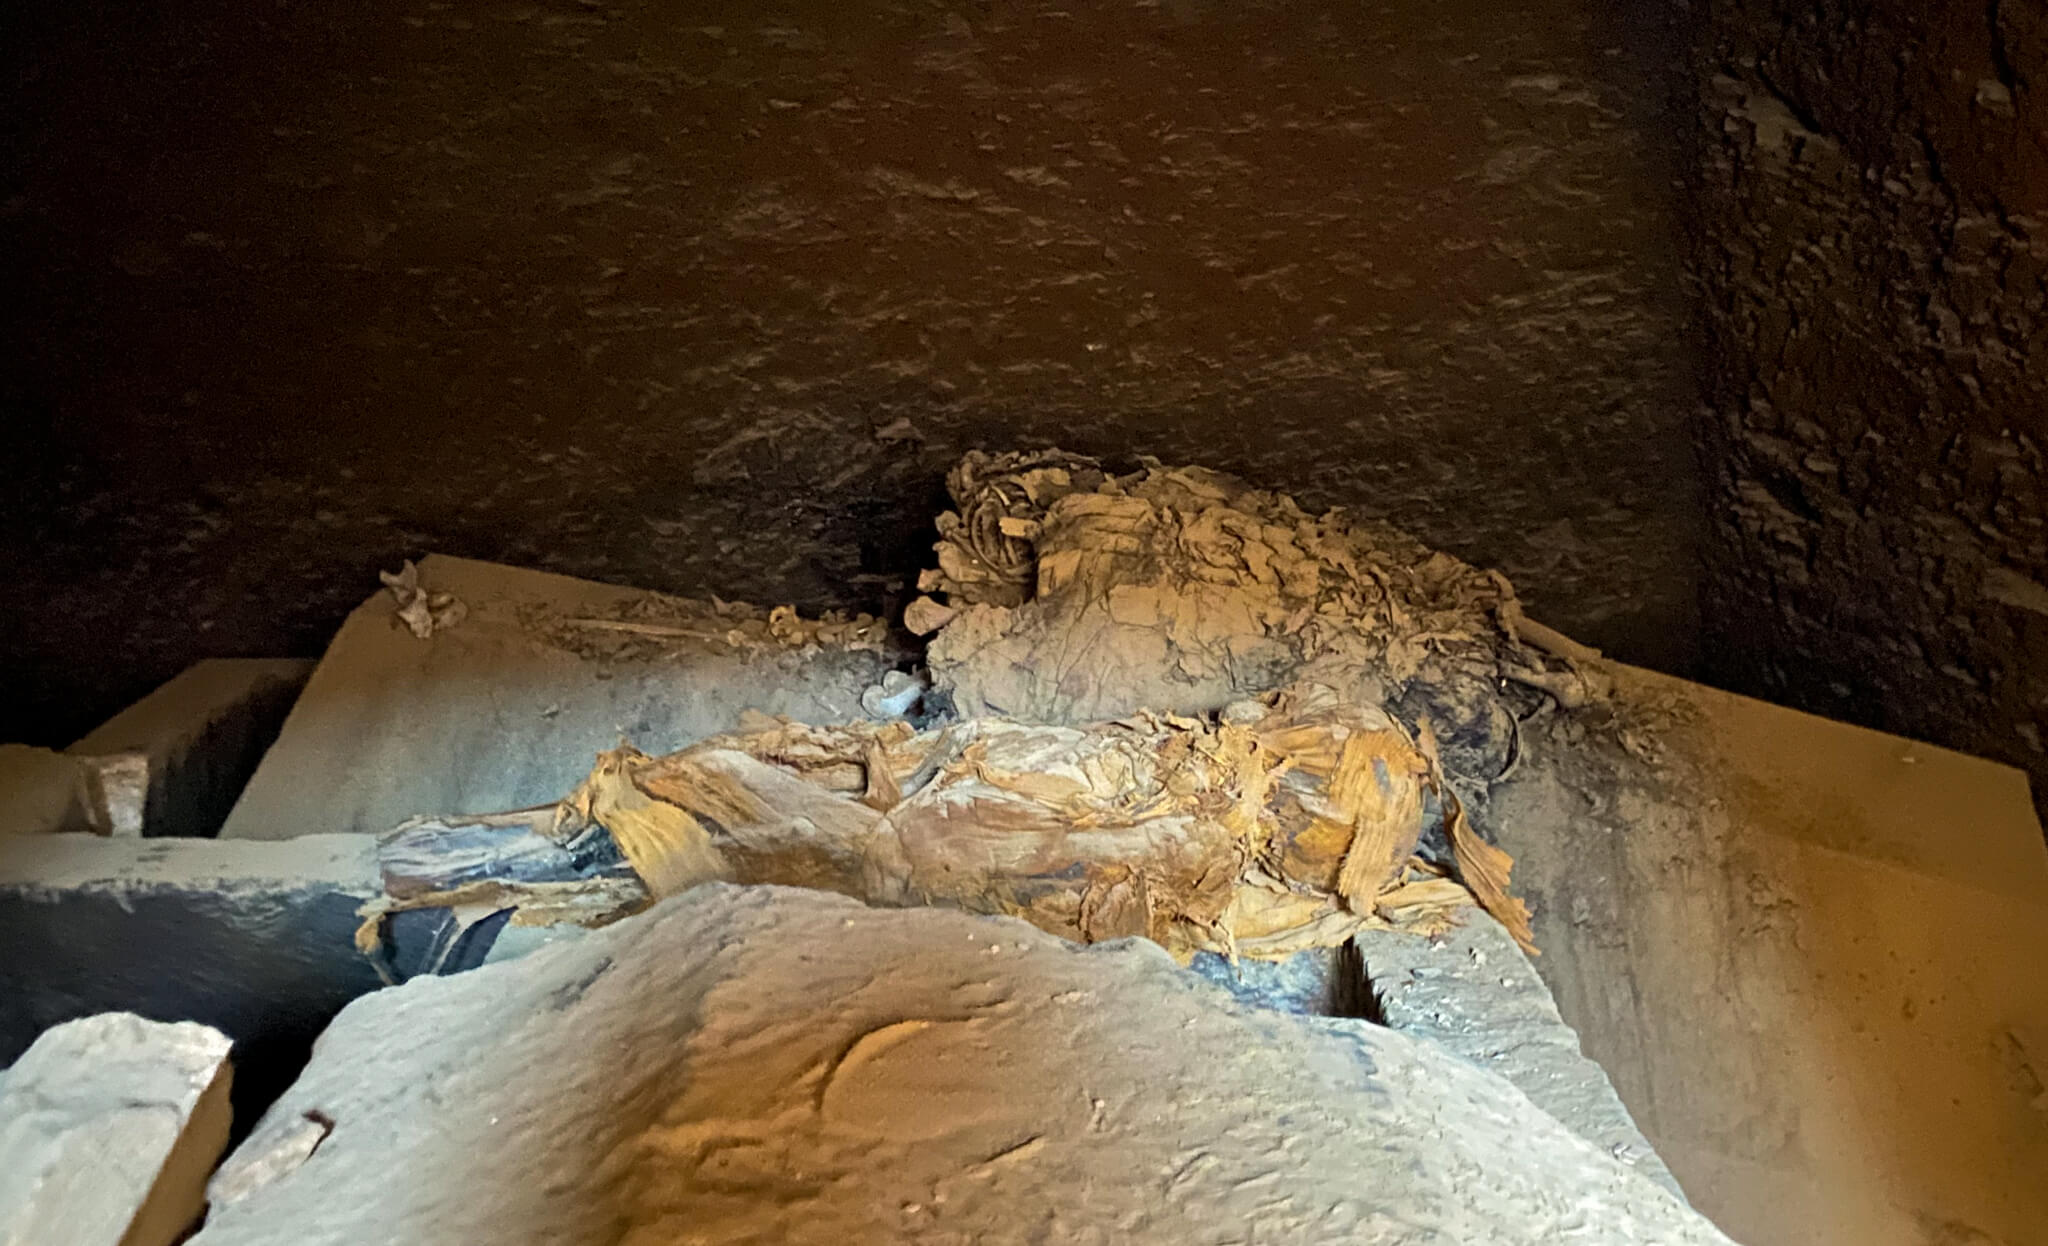 A small mummy inside an open tomb.